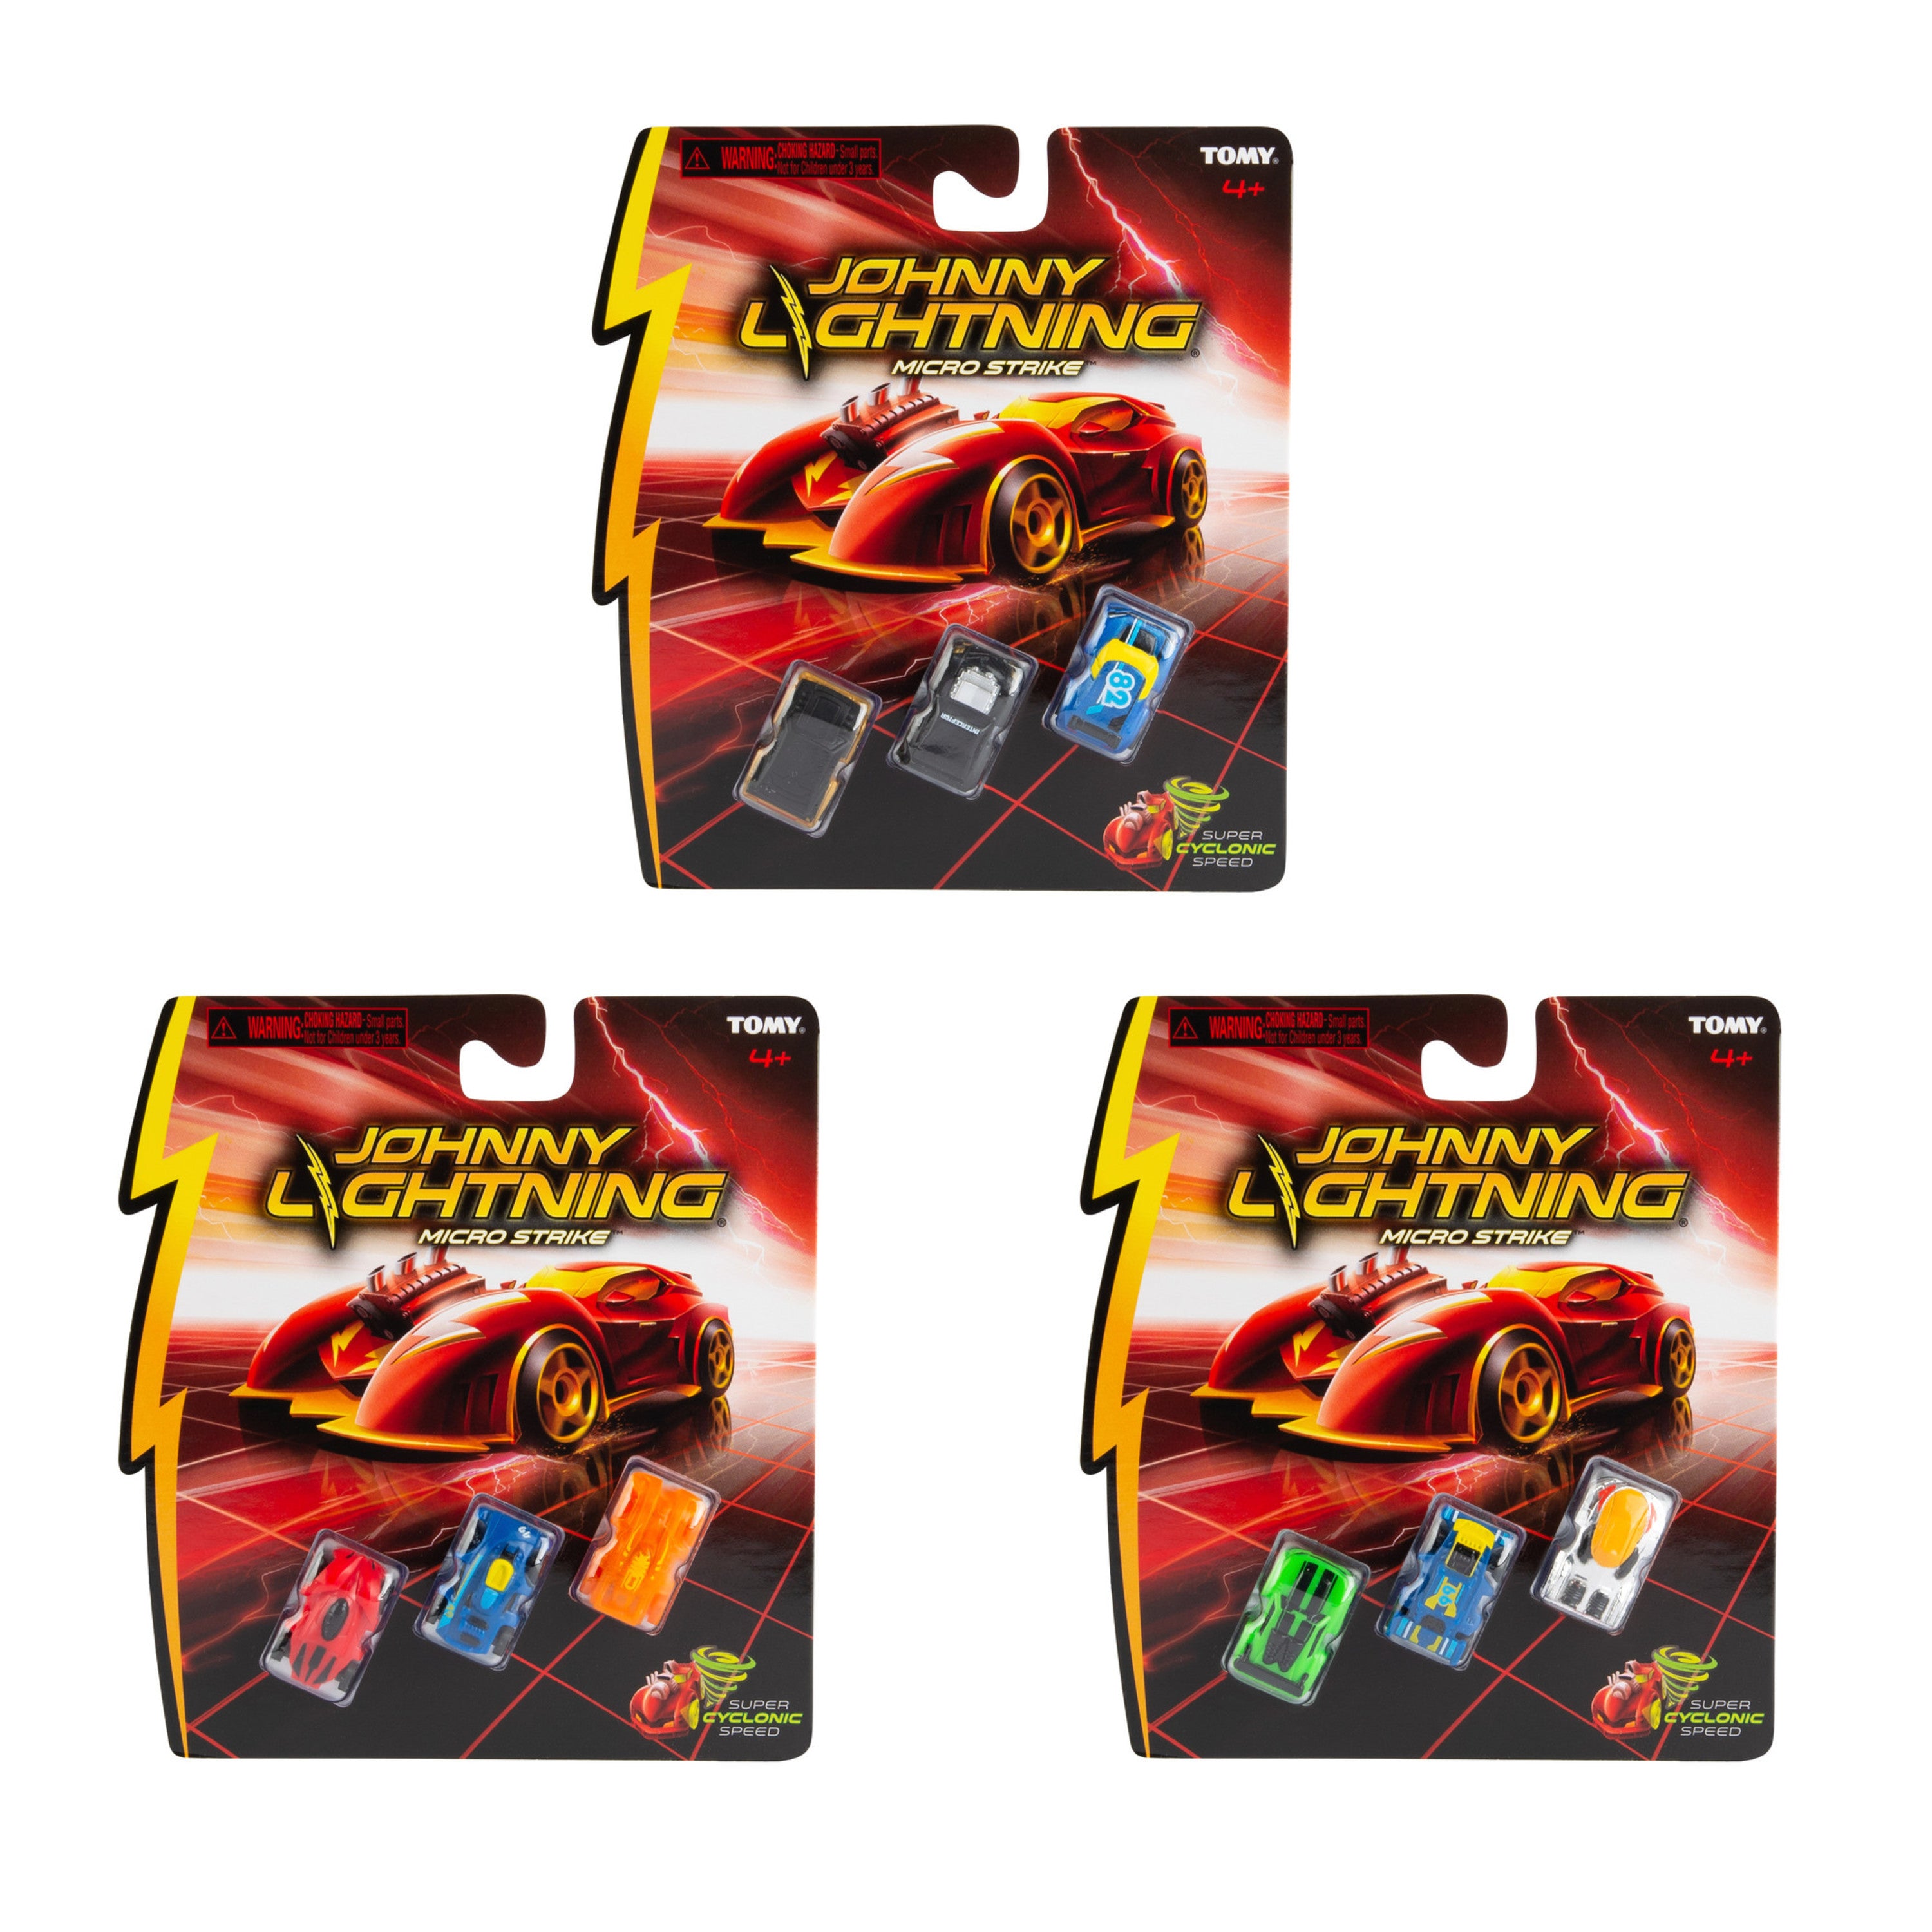 Johnny Lightning Micro Strike (3 pack)